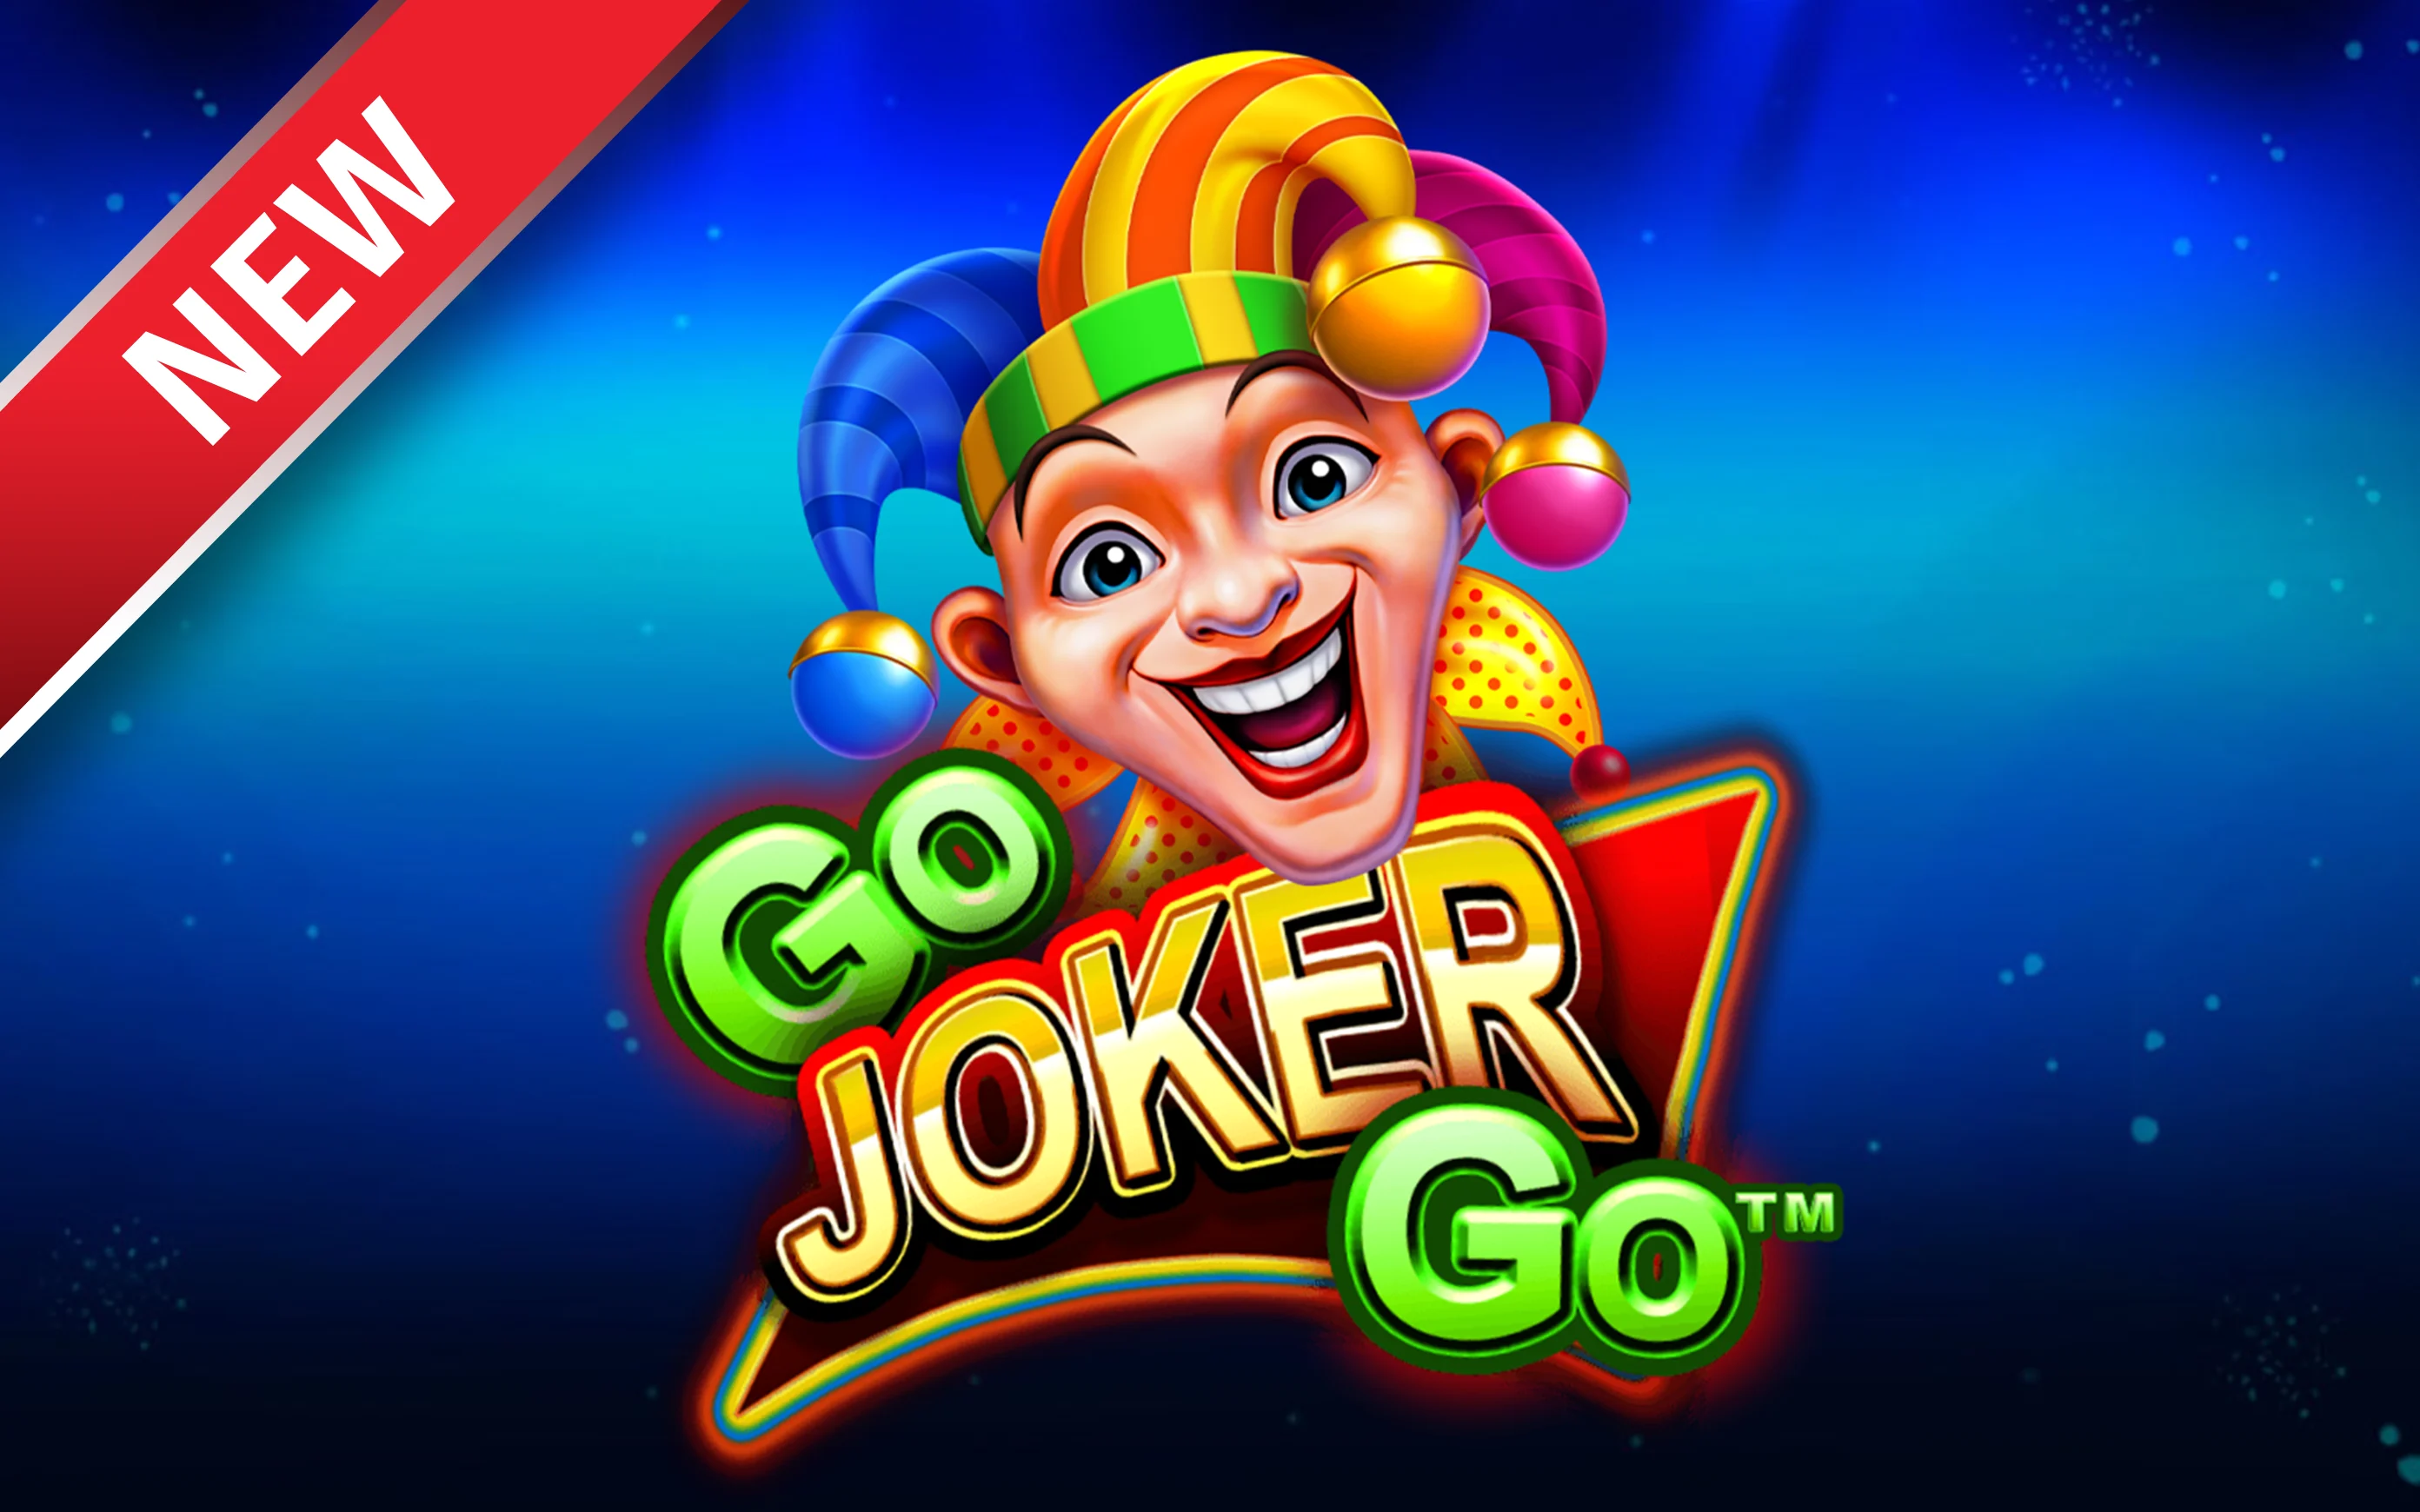 Gioca a Go Joker Go sul casino online Starcasino.be